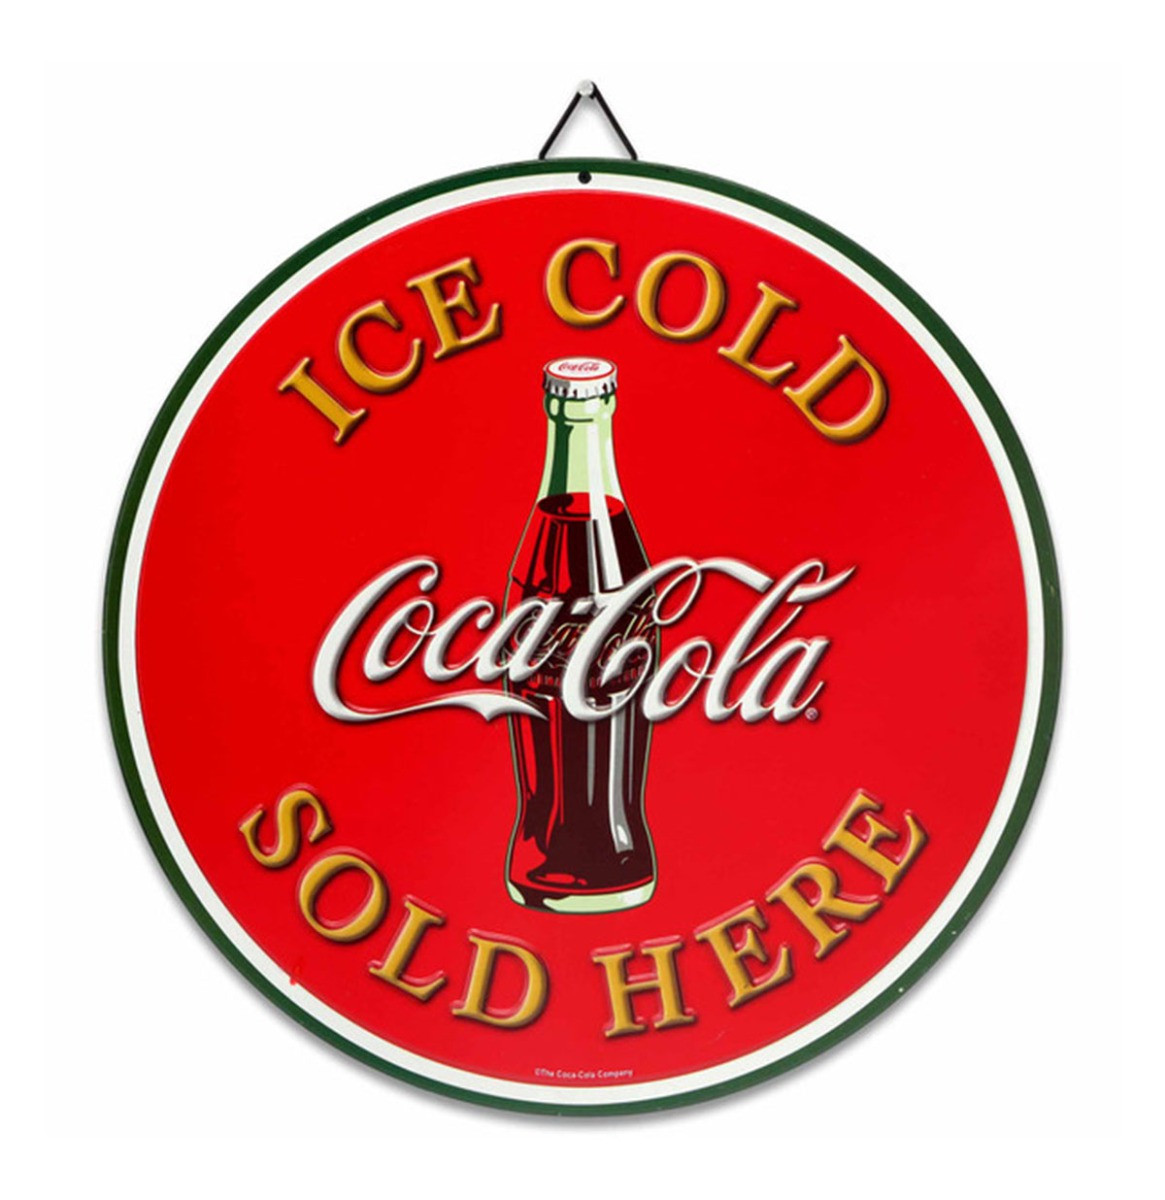 Coca-Cola Ice Cold Sold Here Rond Metalen Bord - Ø30cm